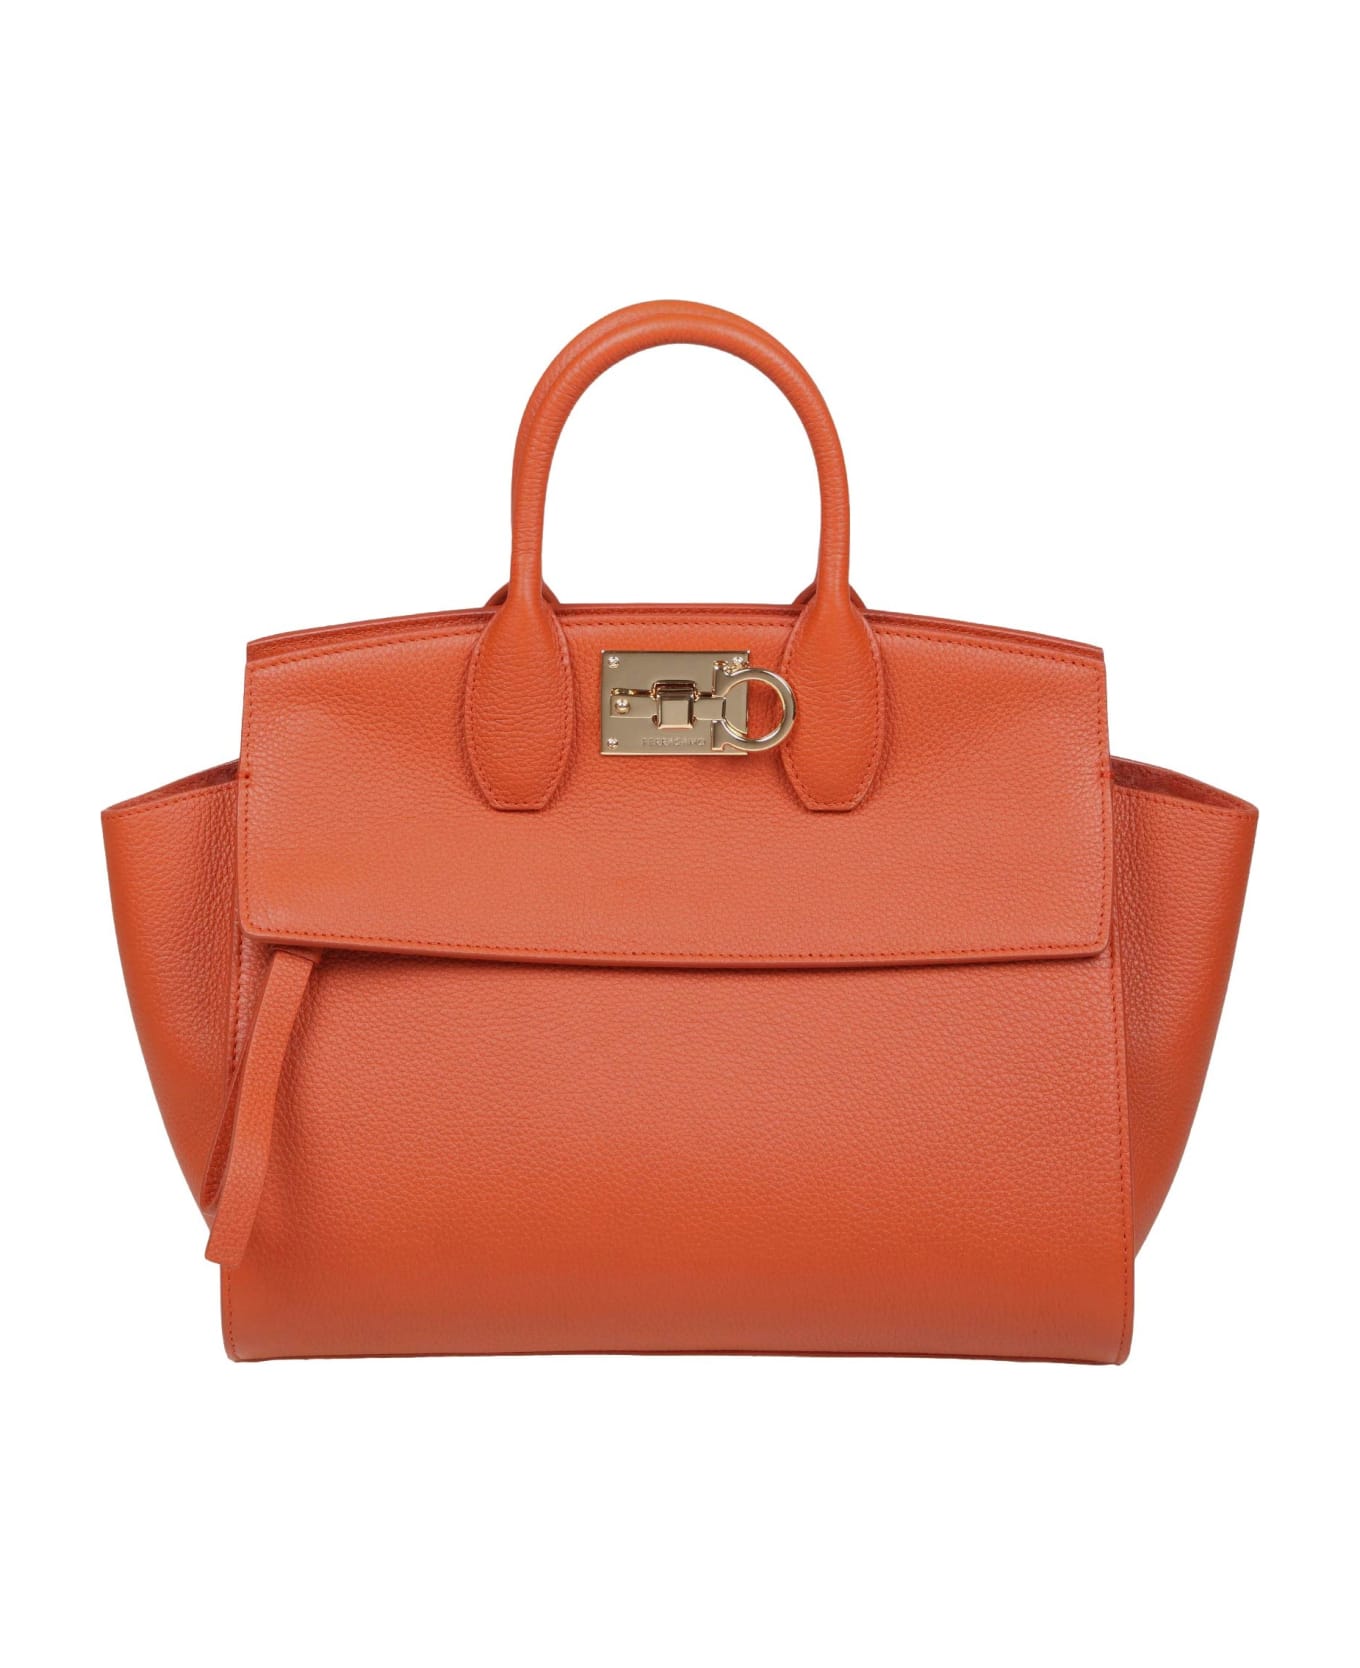 Ferragamo Studio Sof Handbag In Terracotta Color Leather - Terracotta